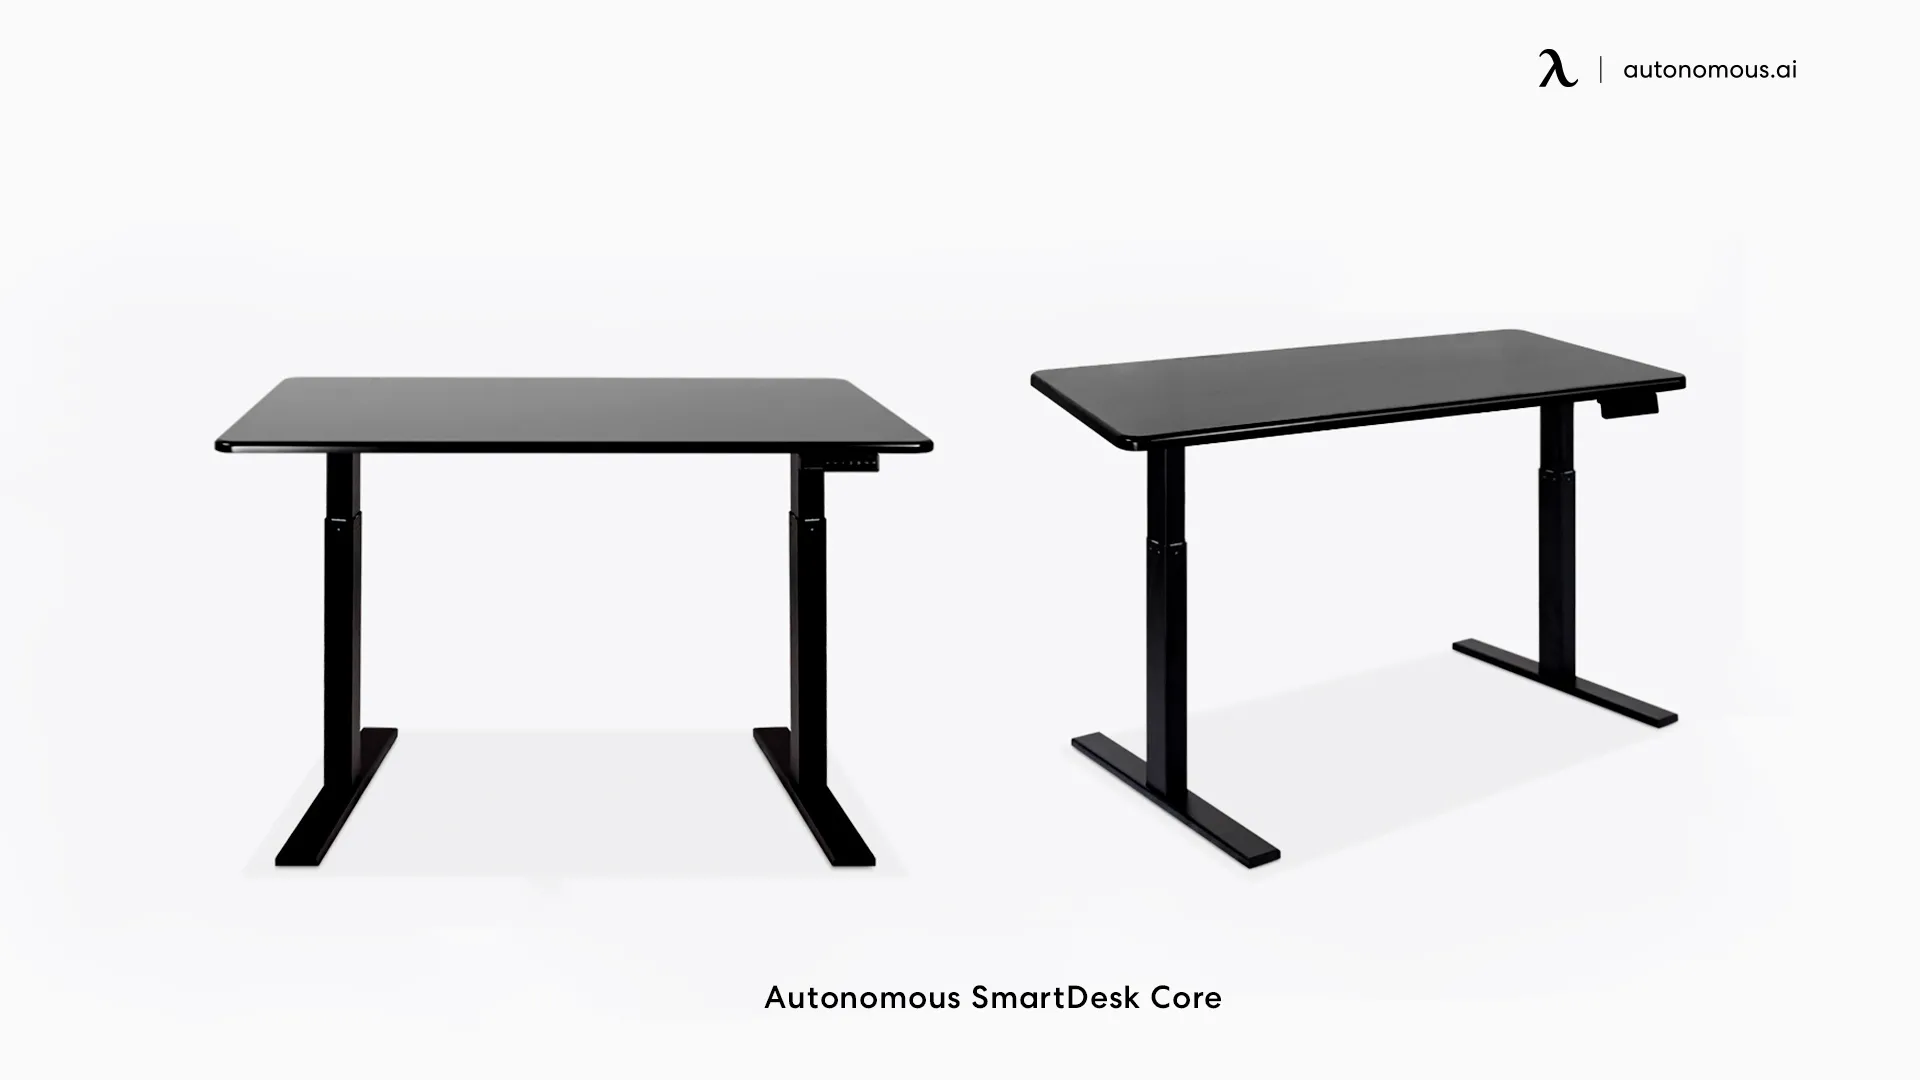 Autonomous SmartDesk Core mdf wood